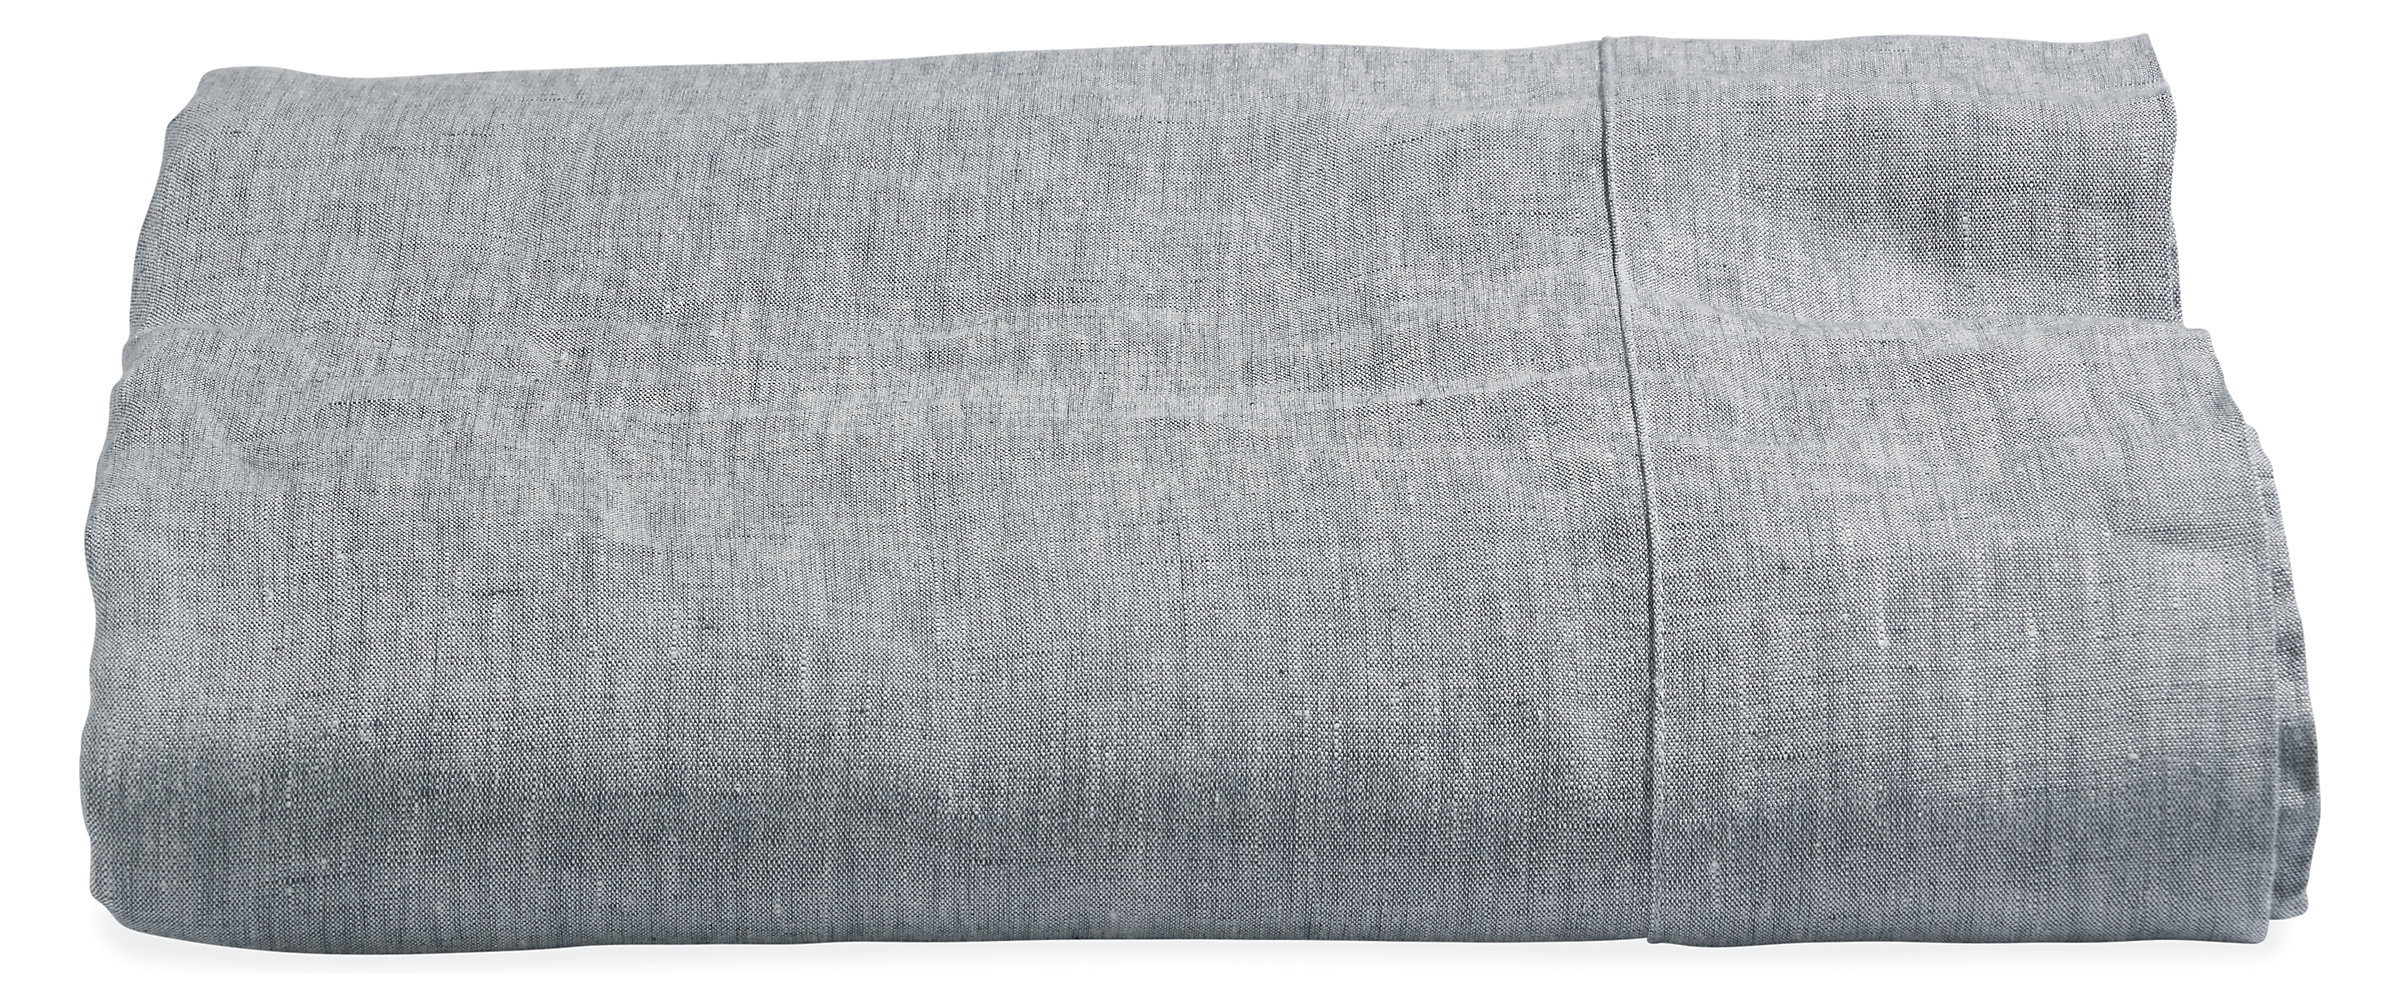 Relaxed Linen Sheets & Pillowcases